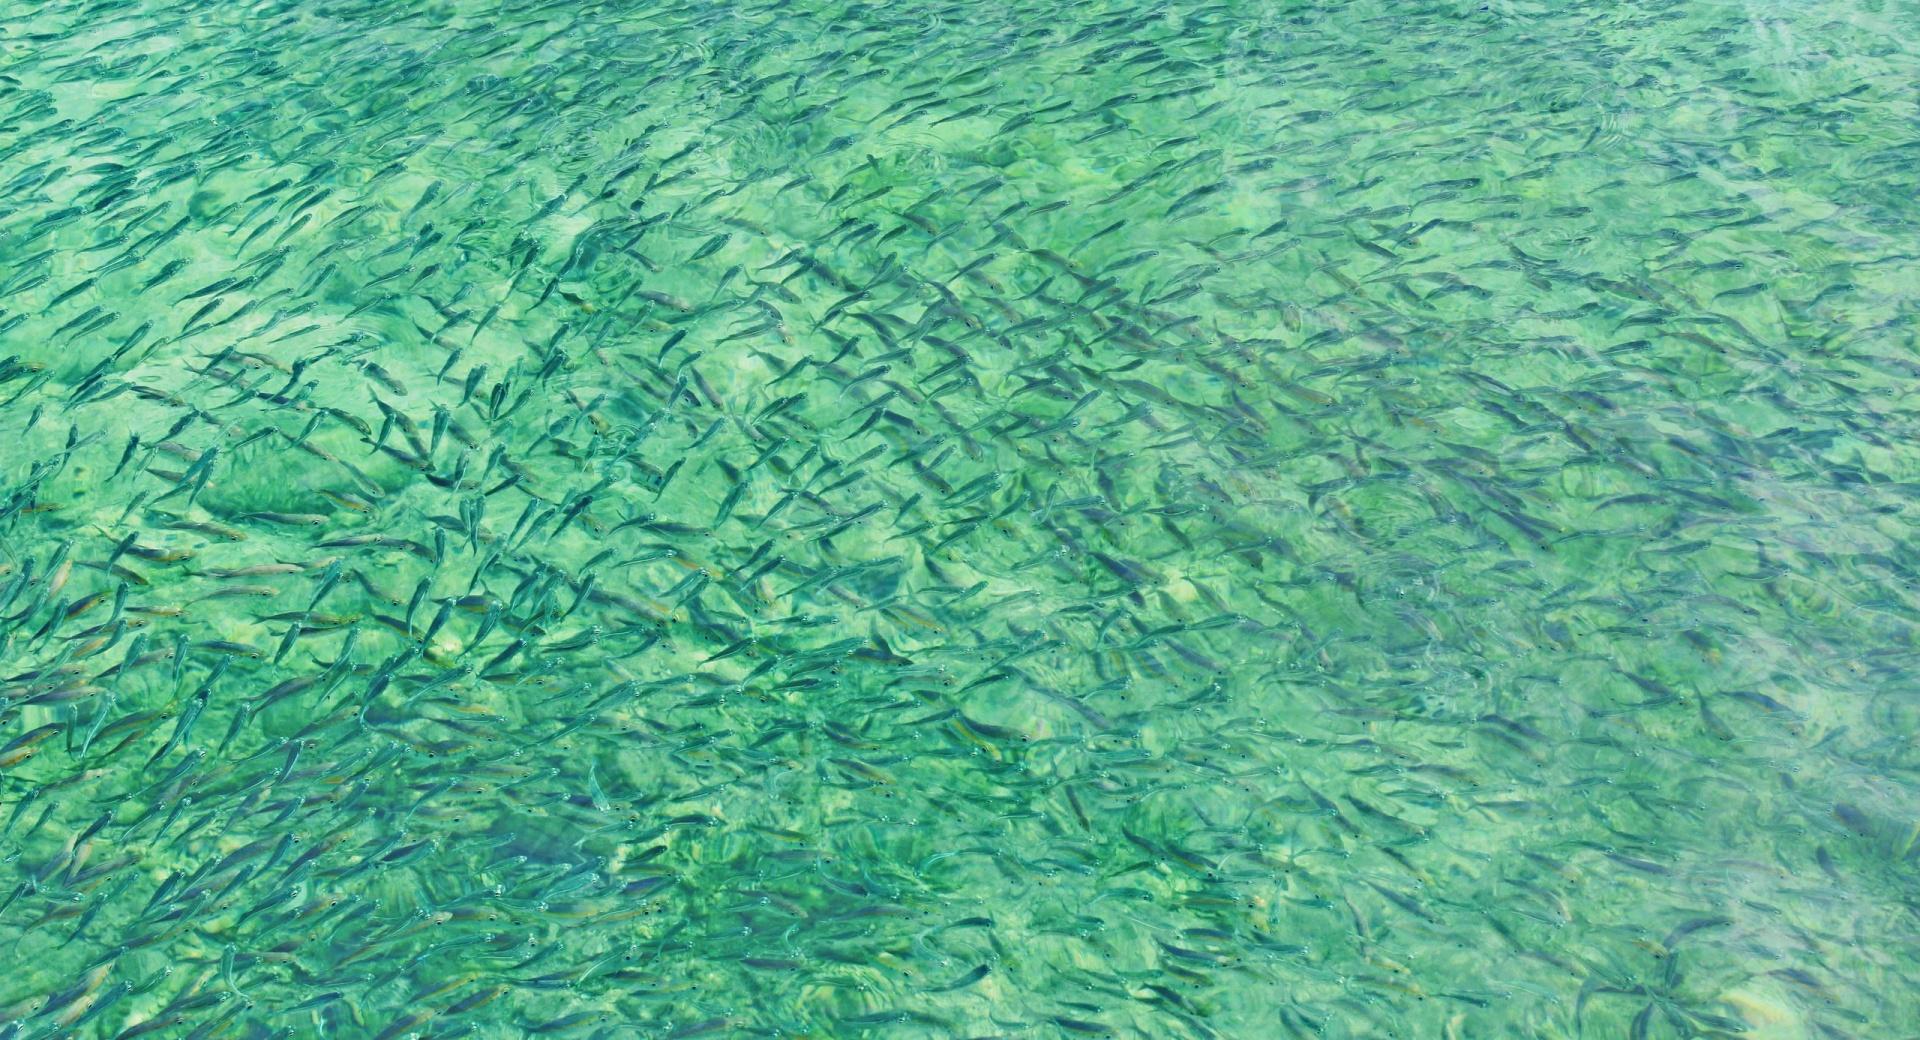 Ikan Ikan Kecil at 320 x 480 iPhone size wallpapers HD quality